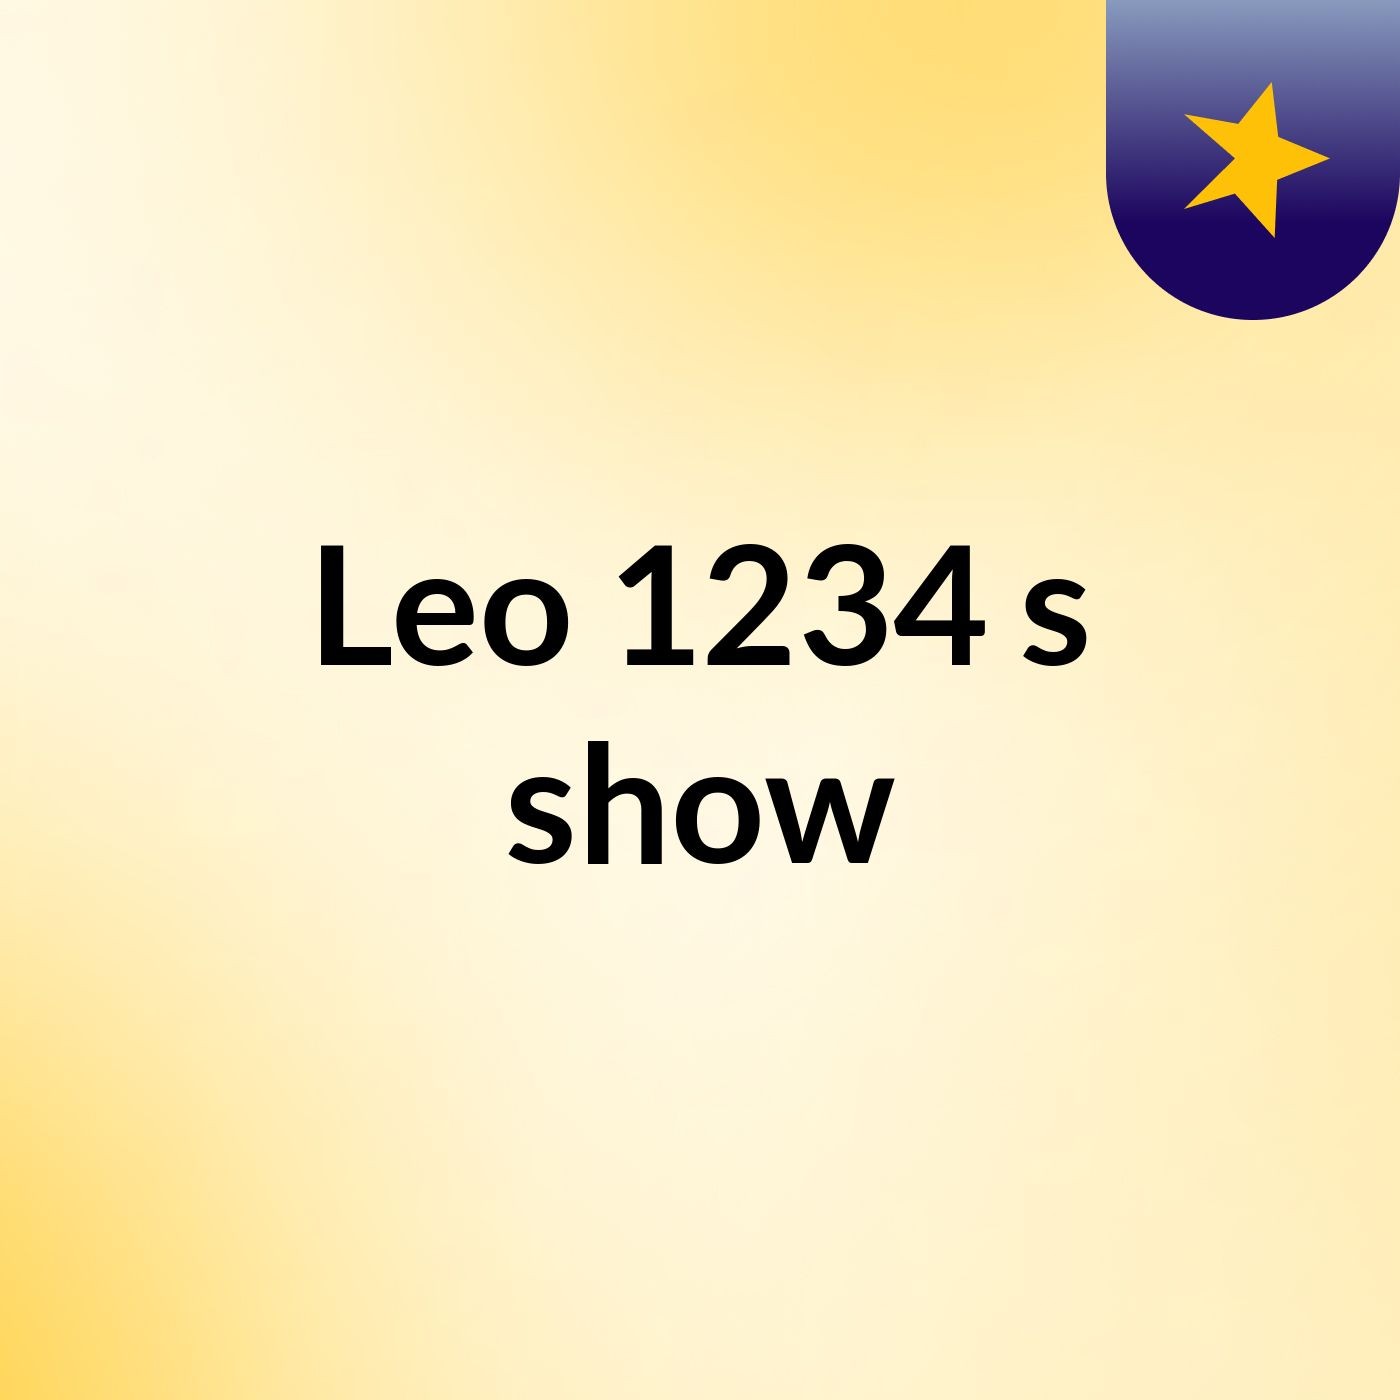 Leo 1234's show